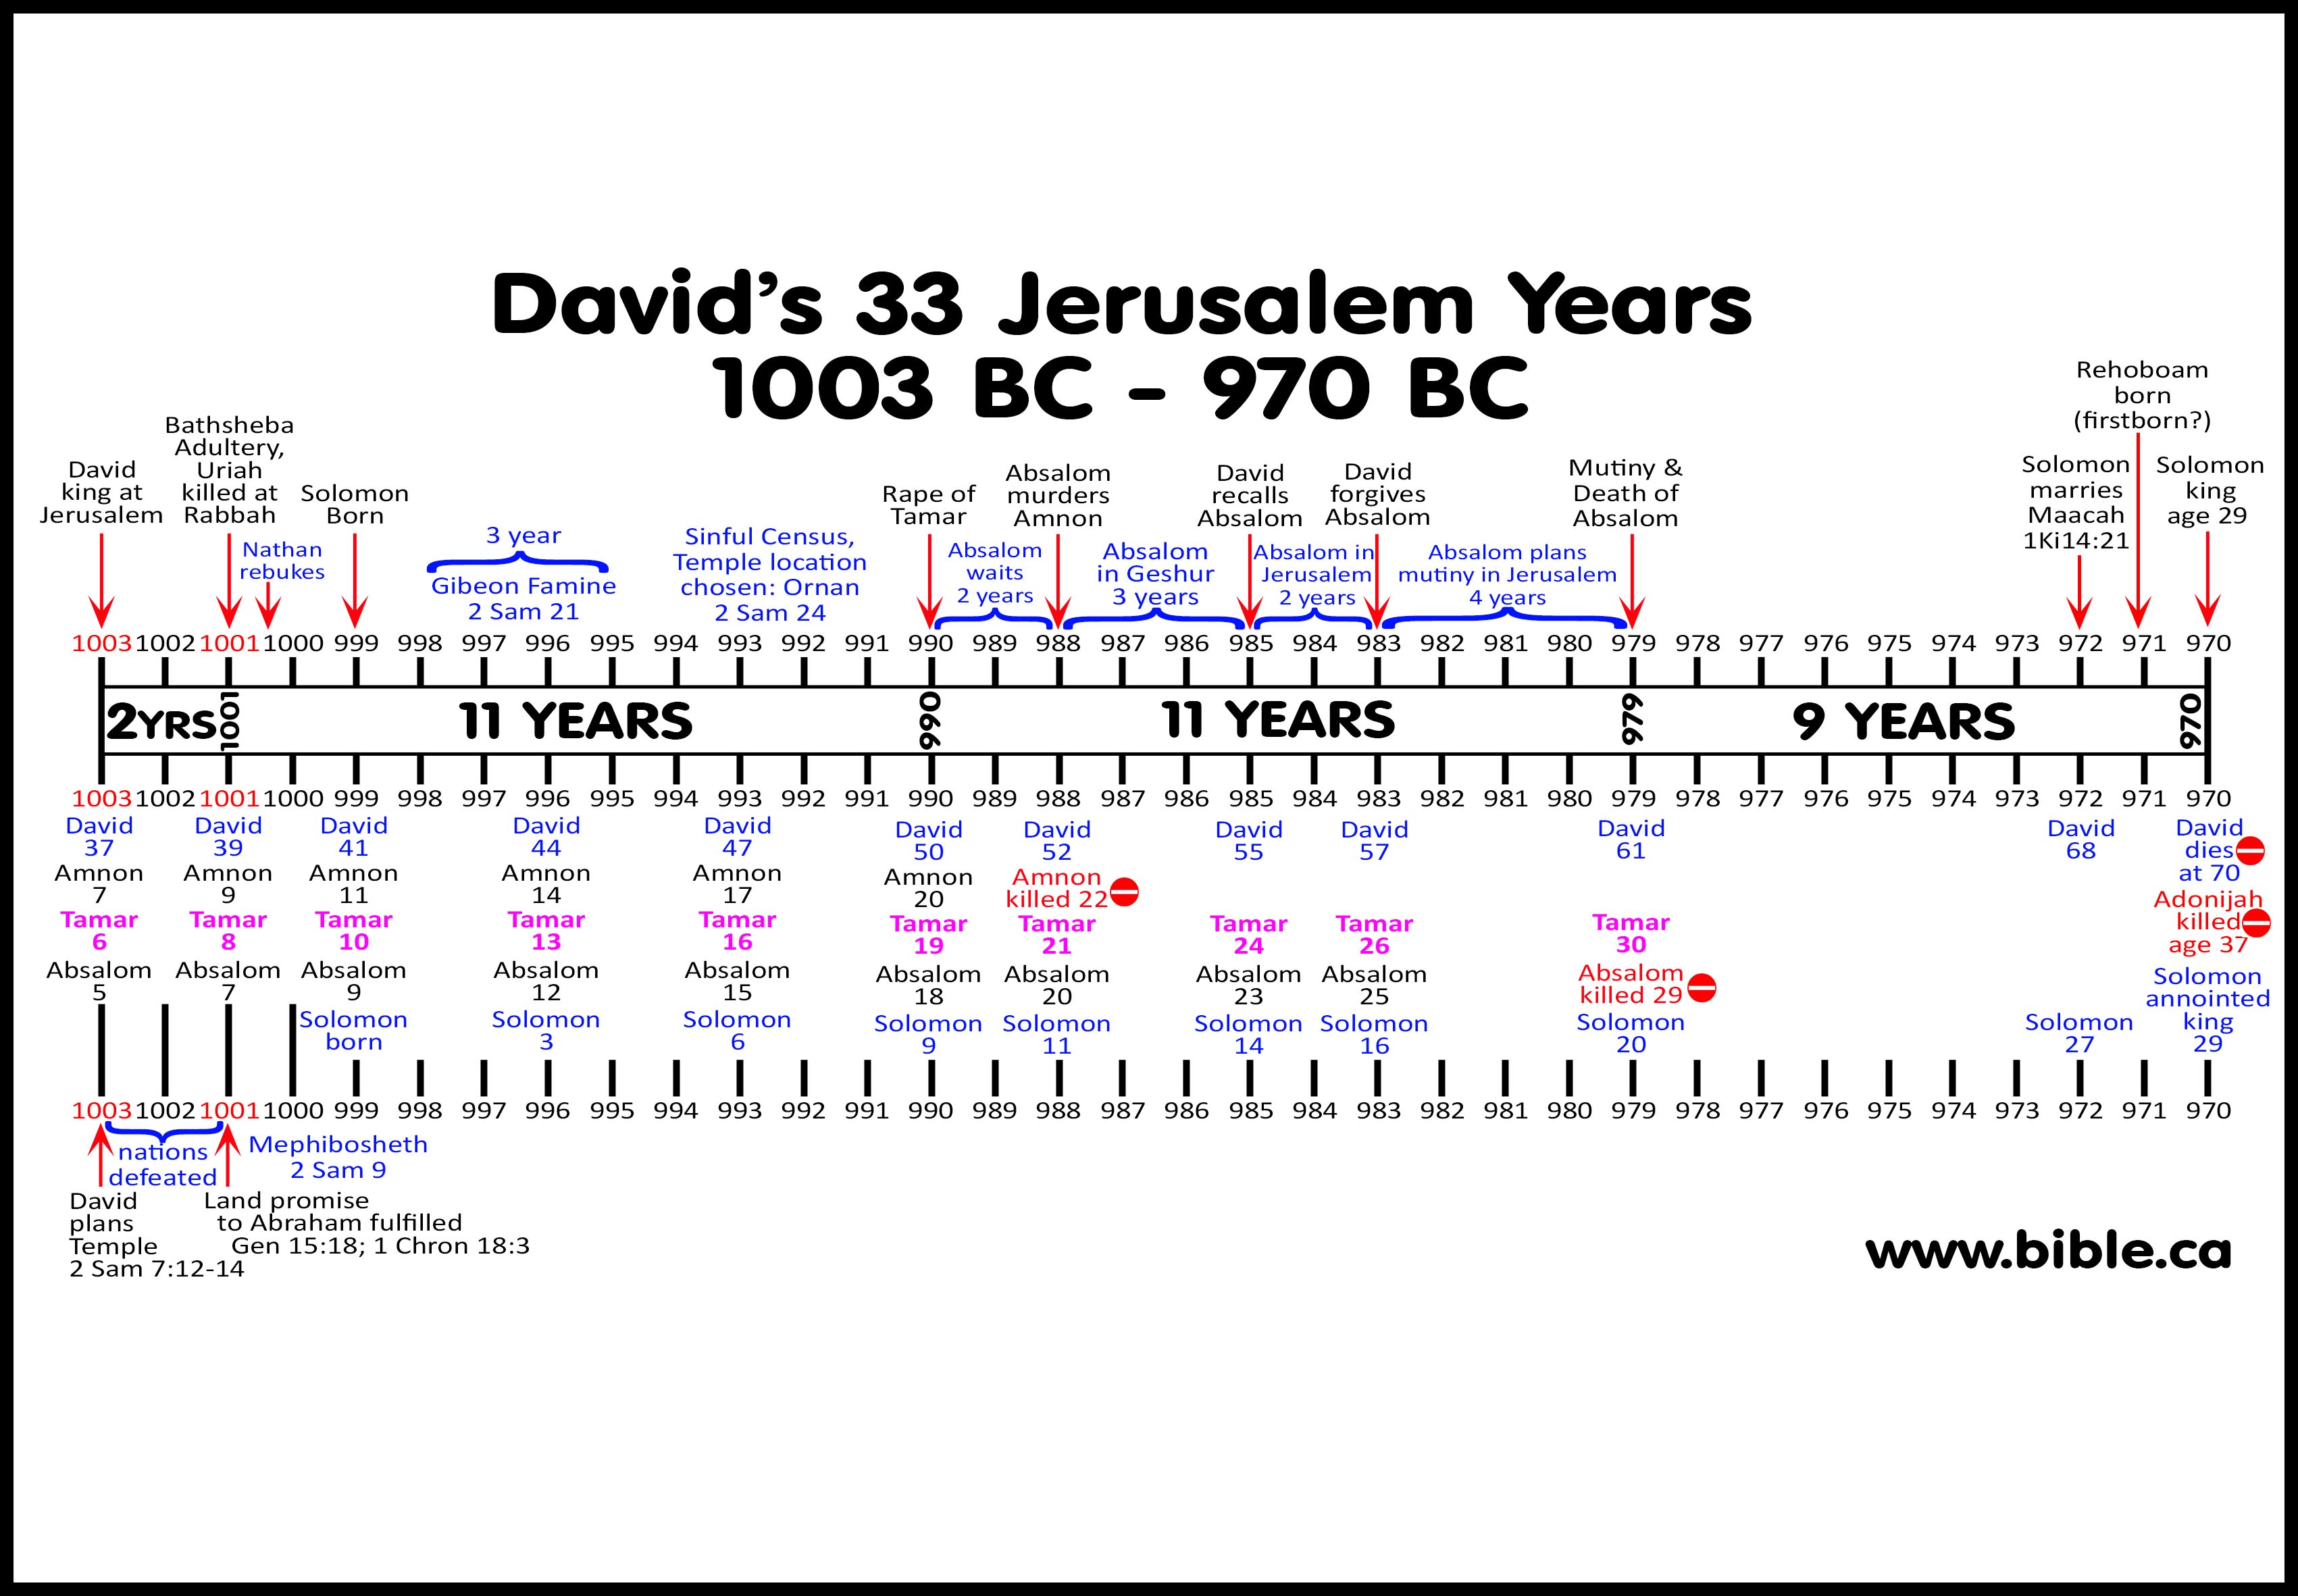 time line of David ruling israel